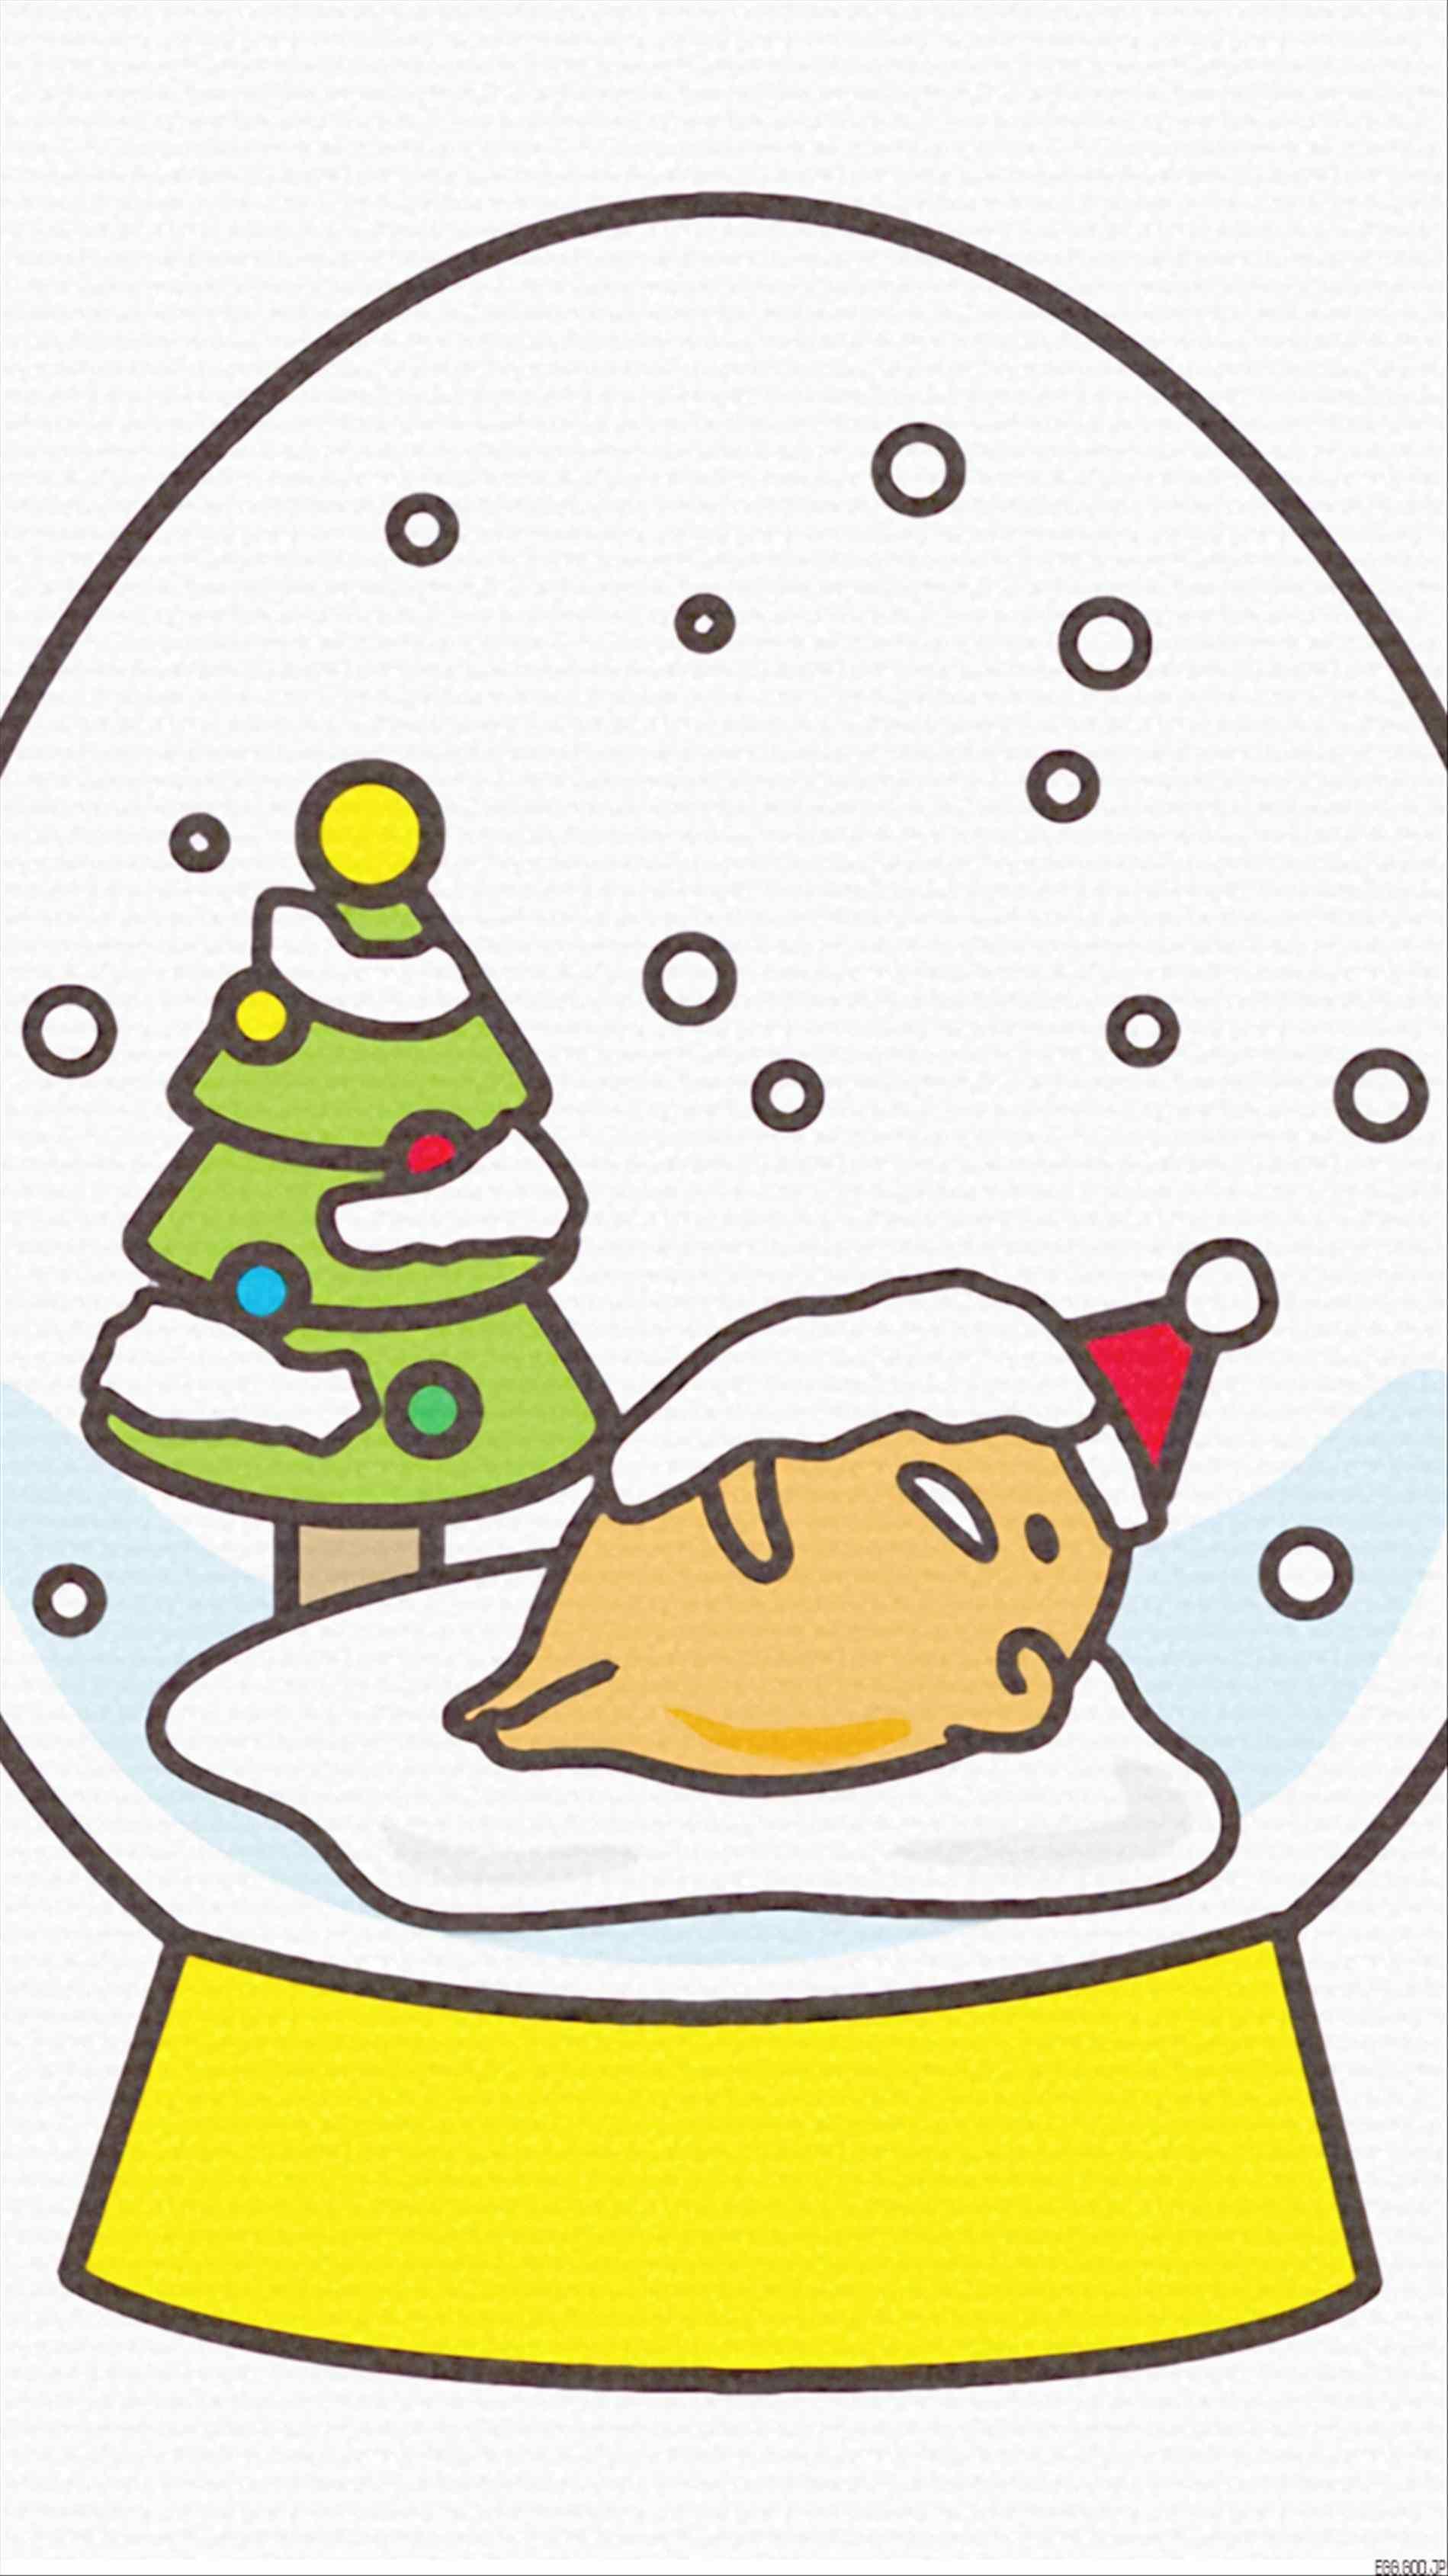 Gudetama egg from Sanrio Gudetama the lazy egg is the Hello Kitty